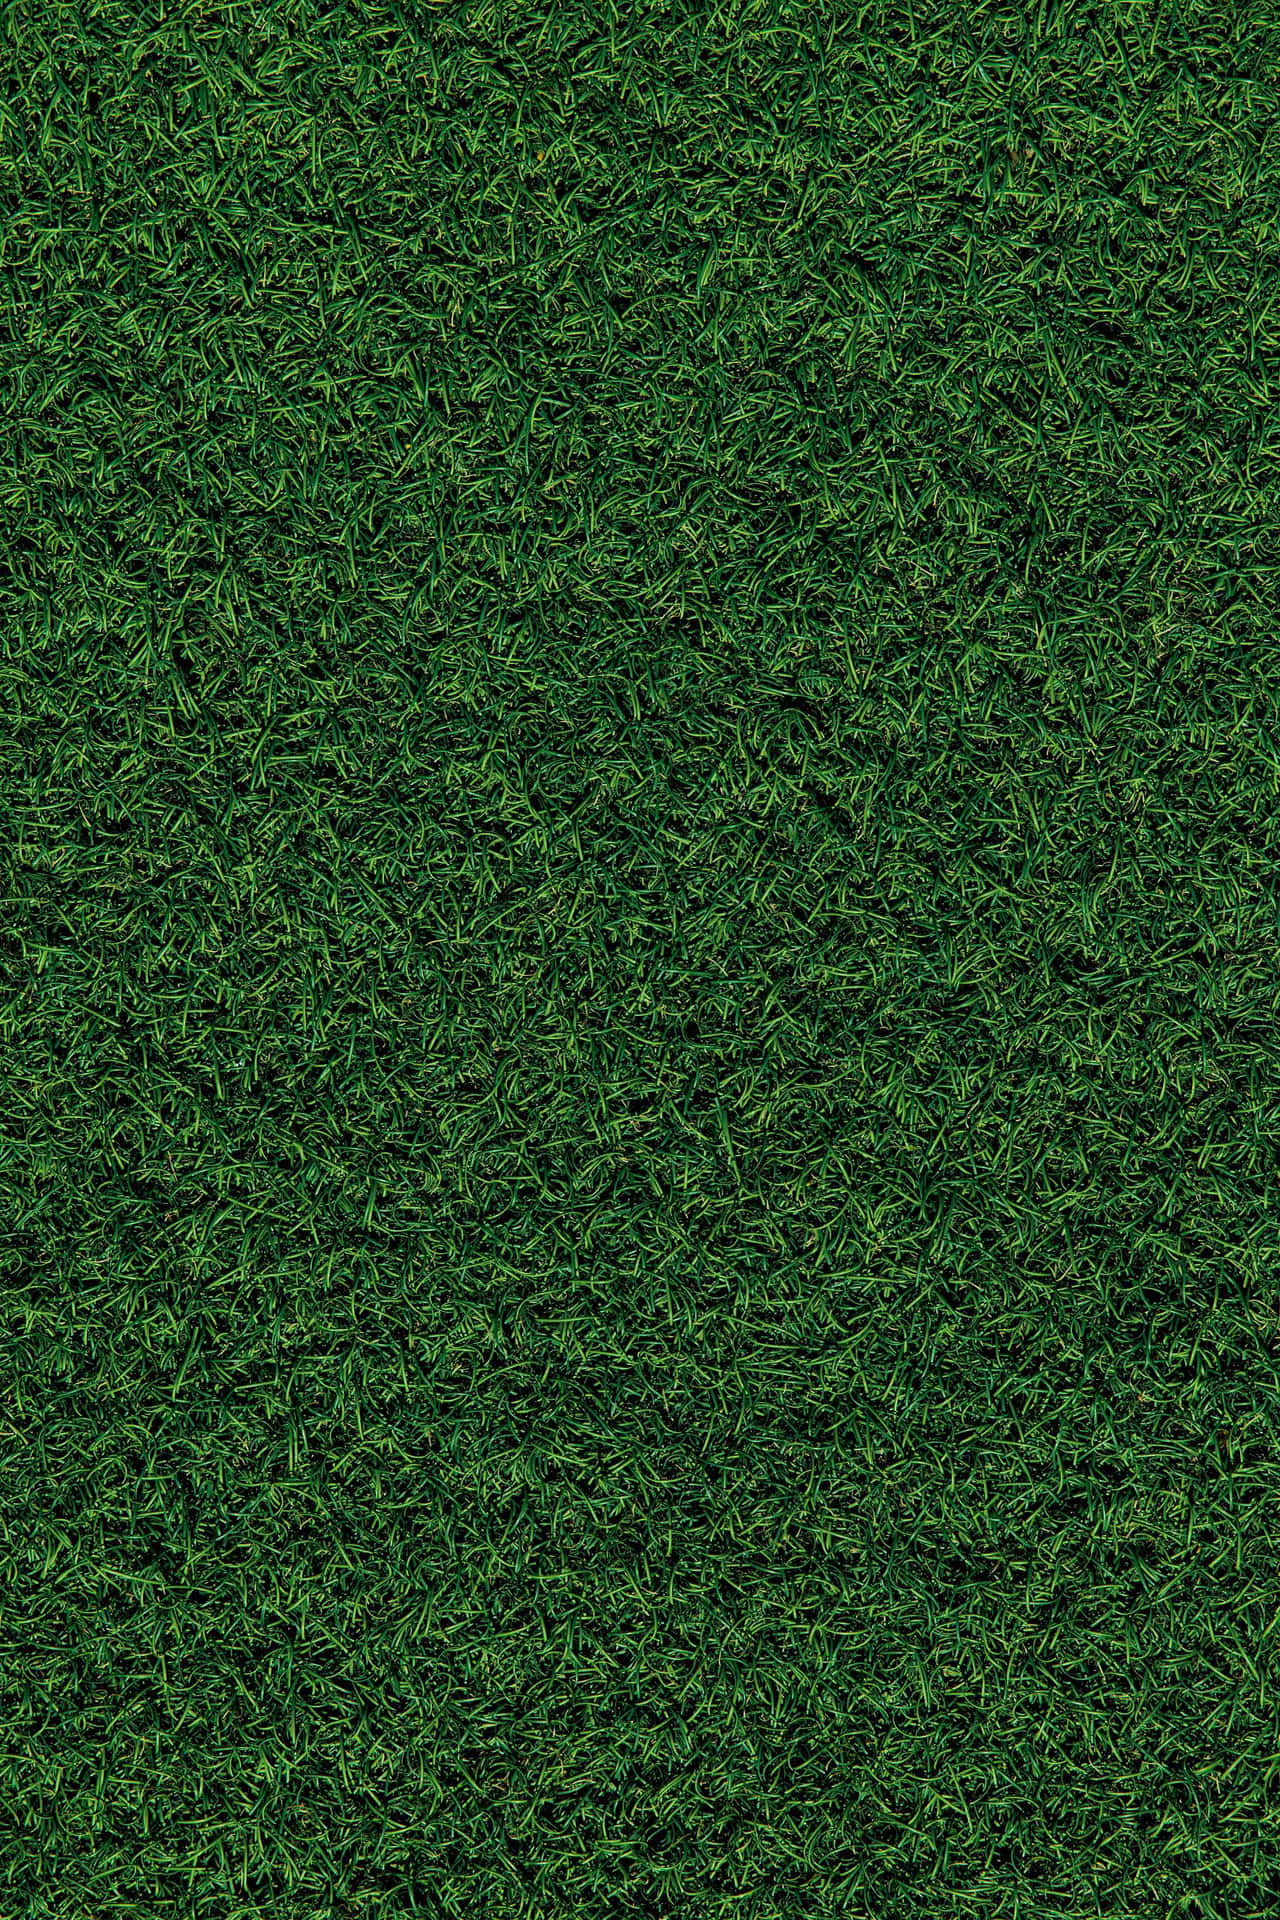 Plain Dark Green Artificial Turf Texture Background